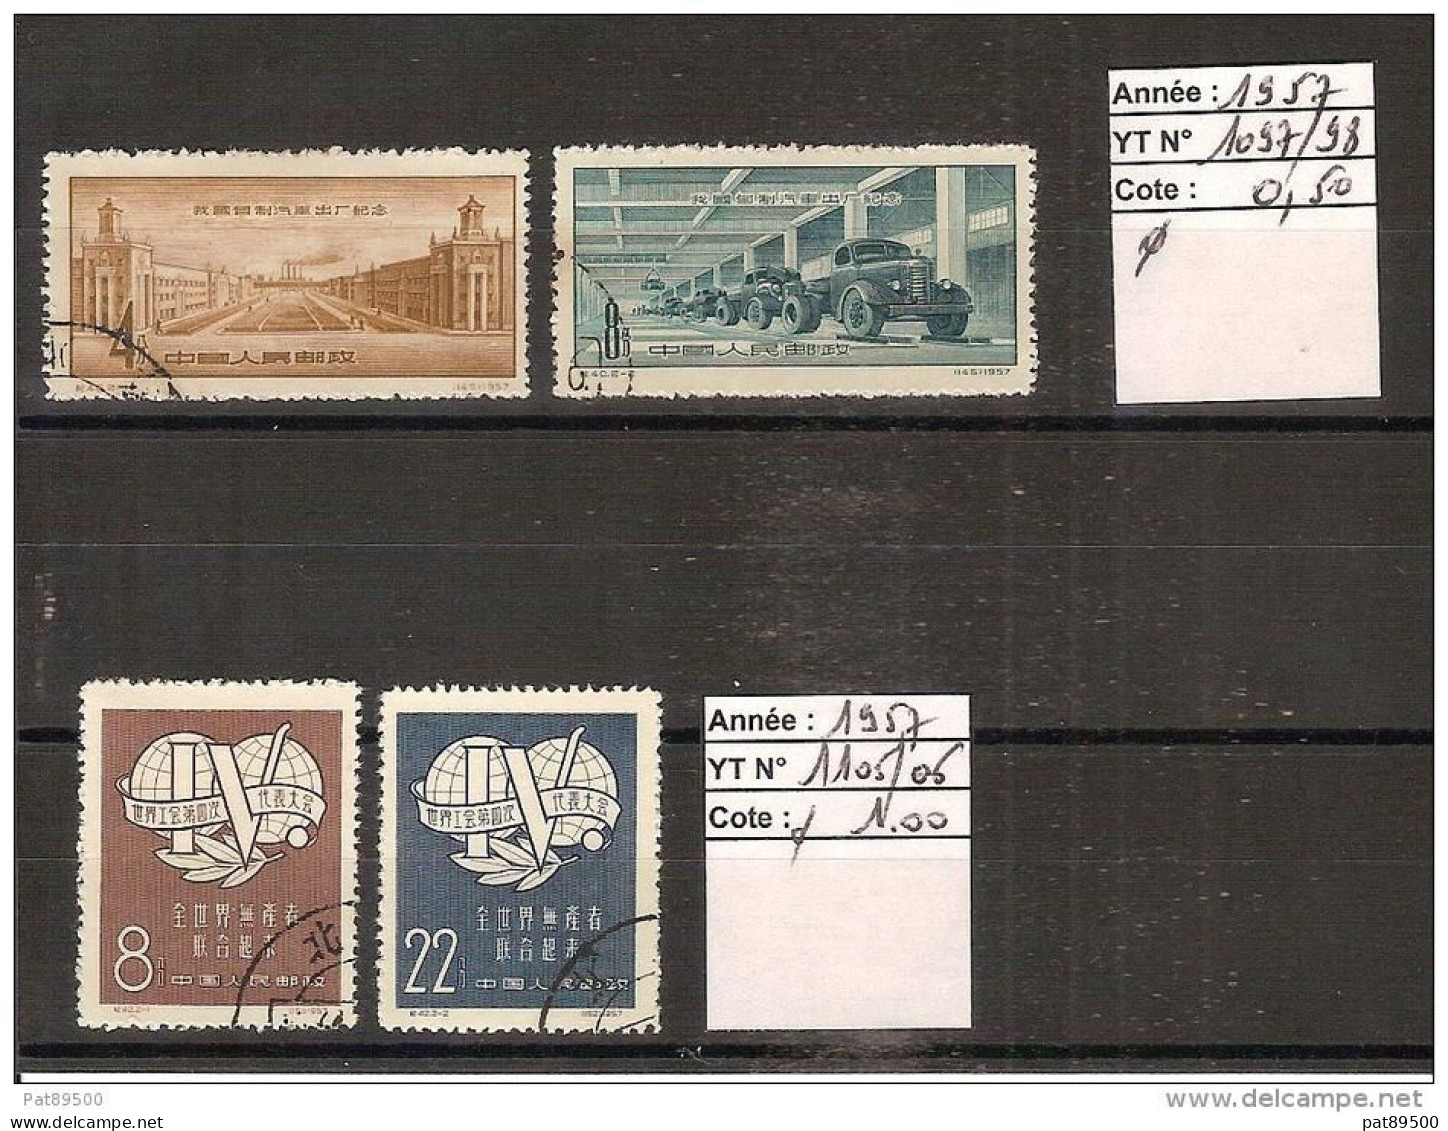 CHINE 1957 / Lot De4 T. Obliteres YT 1097/1098 Et 1105/1106  // Cote 2006 = 2.50 Euros - Used Stamps